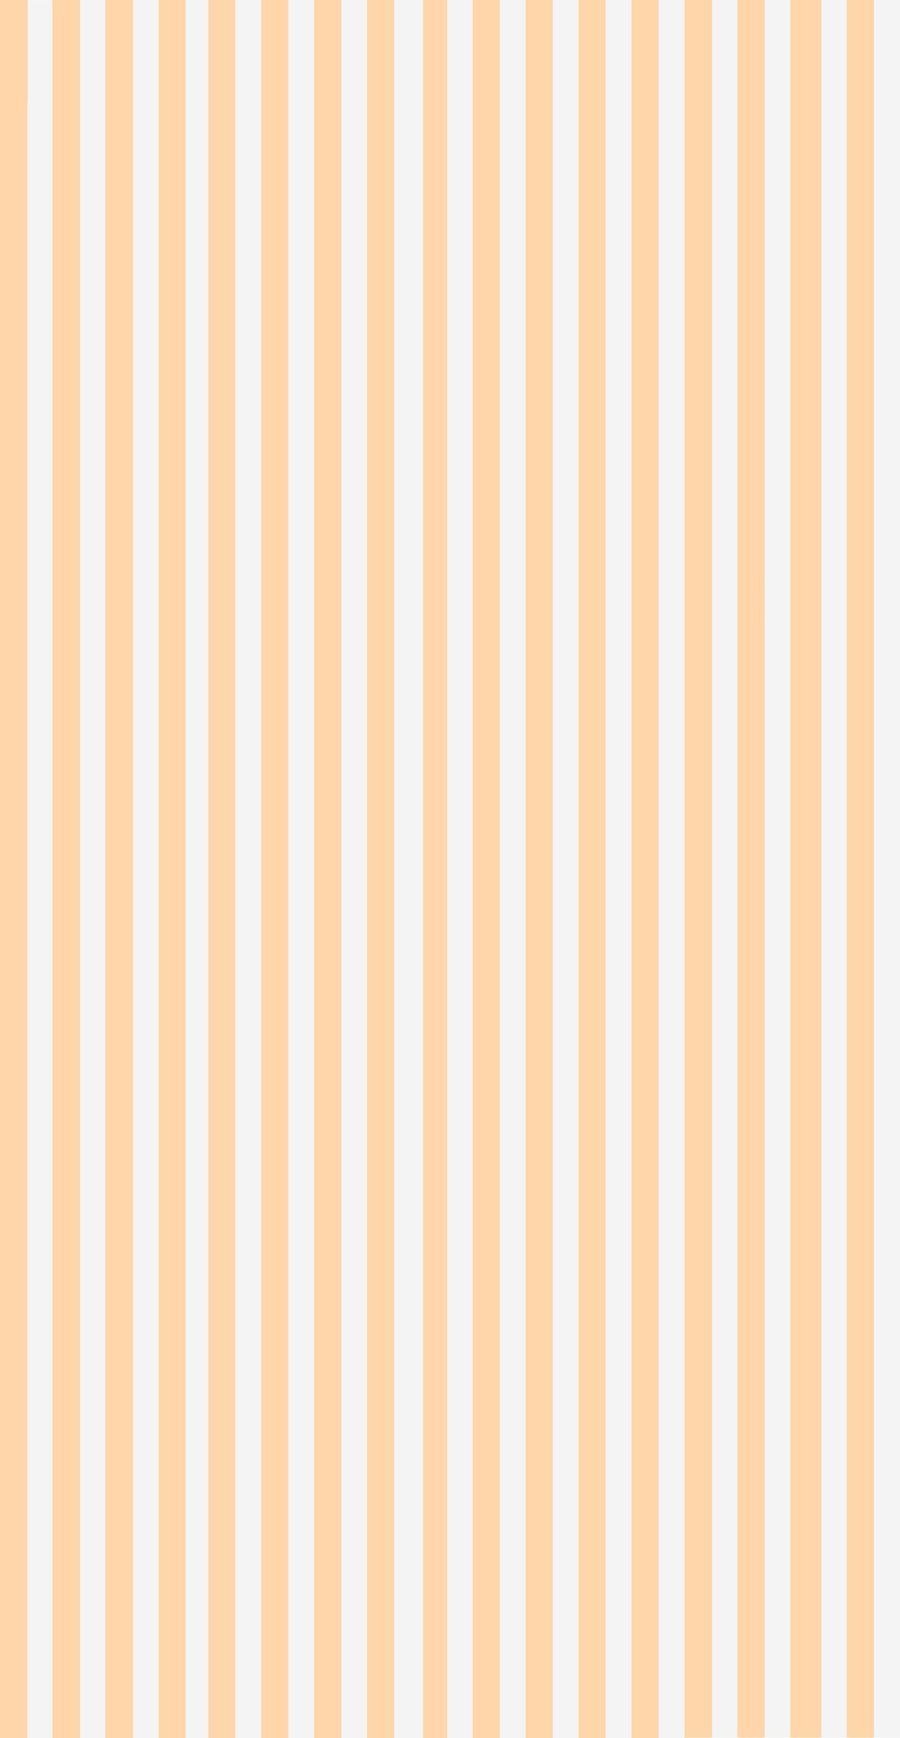 4: Pastel Orange Custom Box Background By Bgs And Banners. IPhone Wallpaper Orange, Orange Aesthetic, Orange Wallpaper